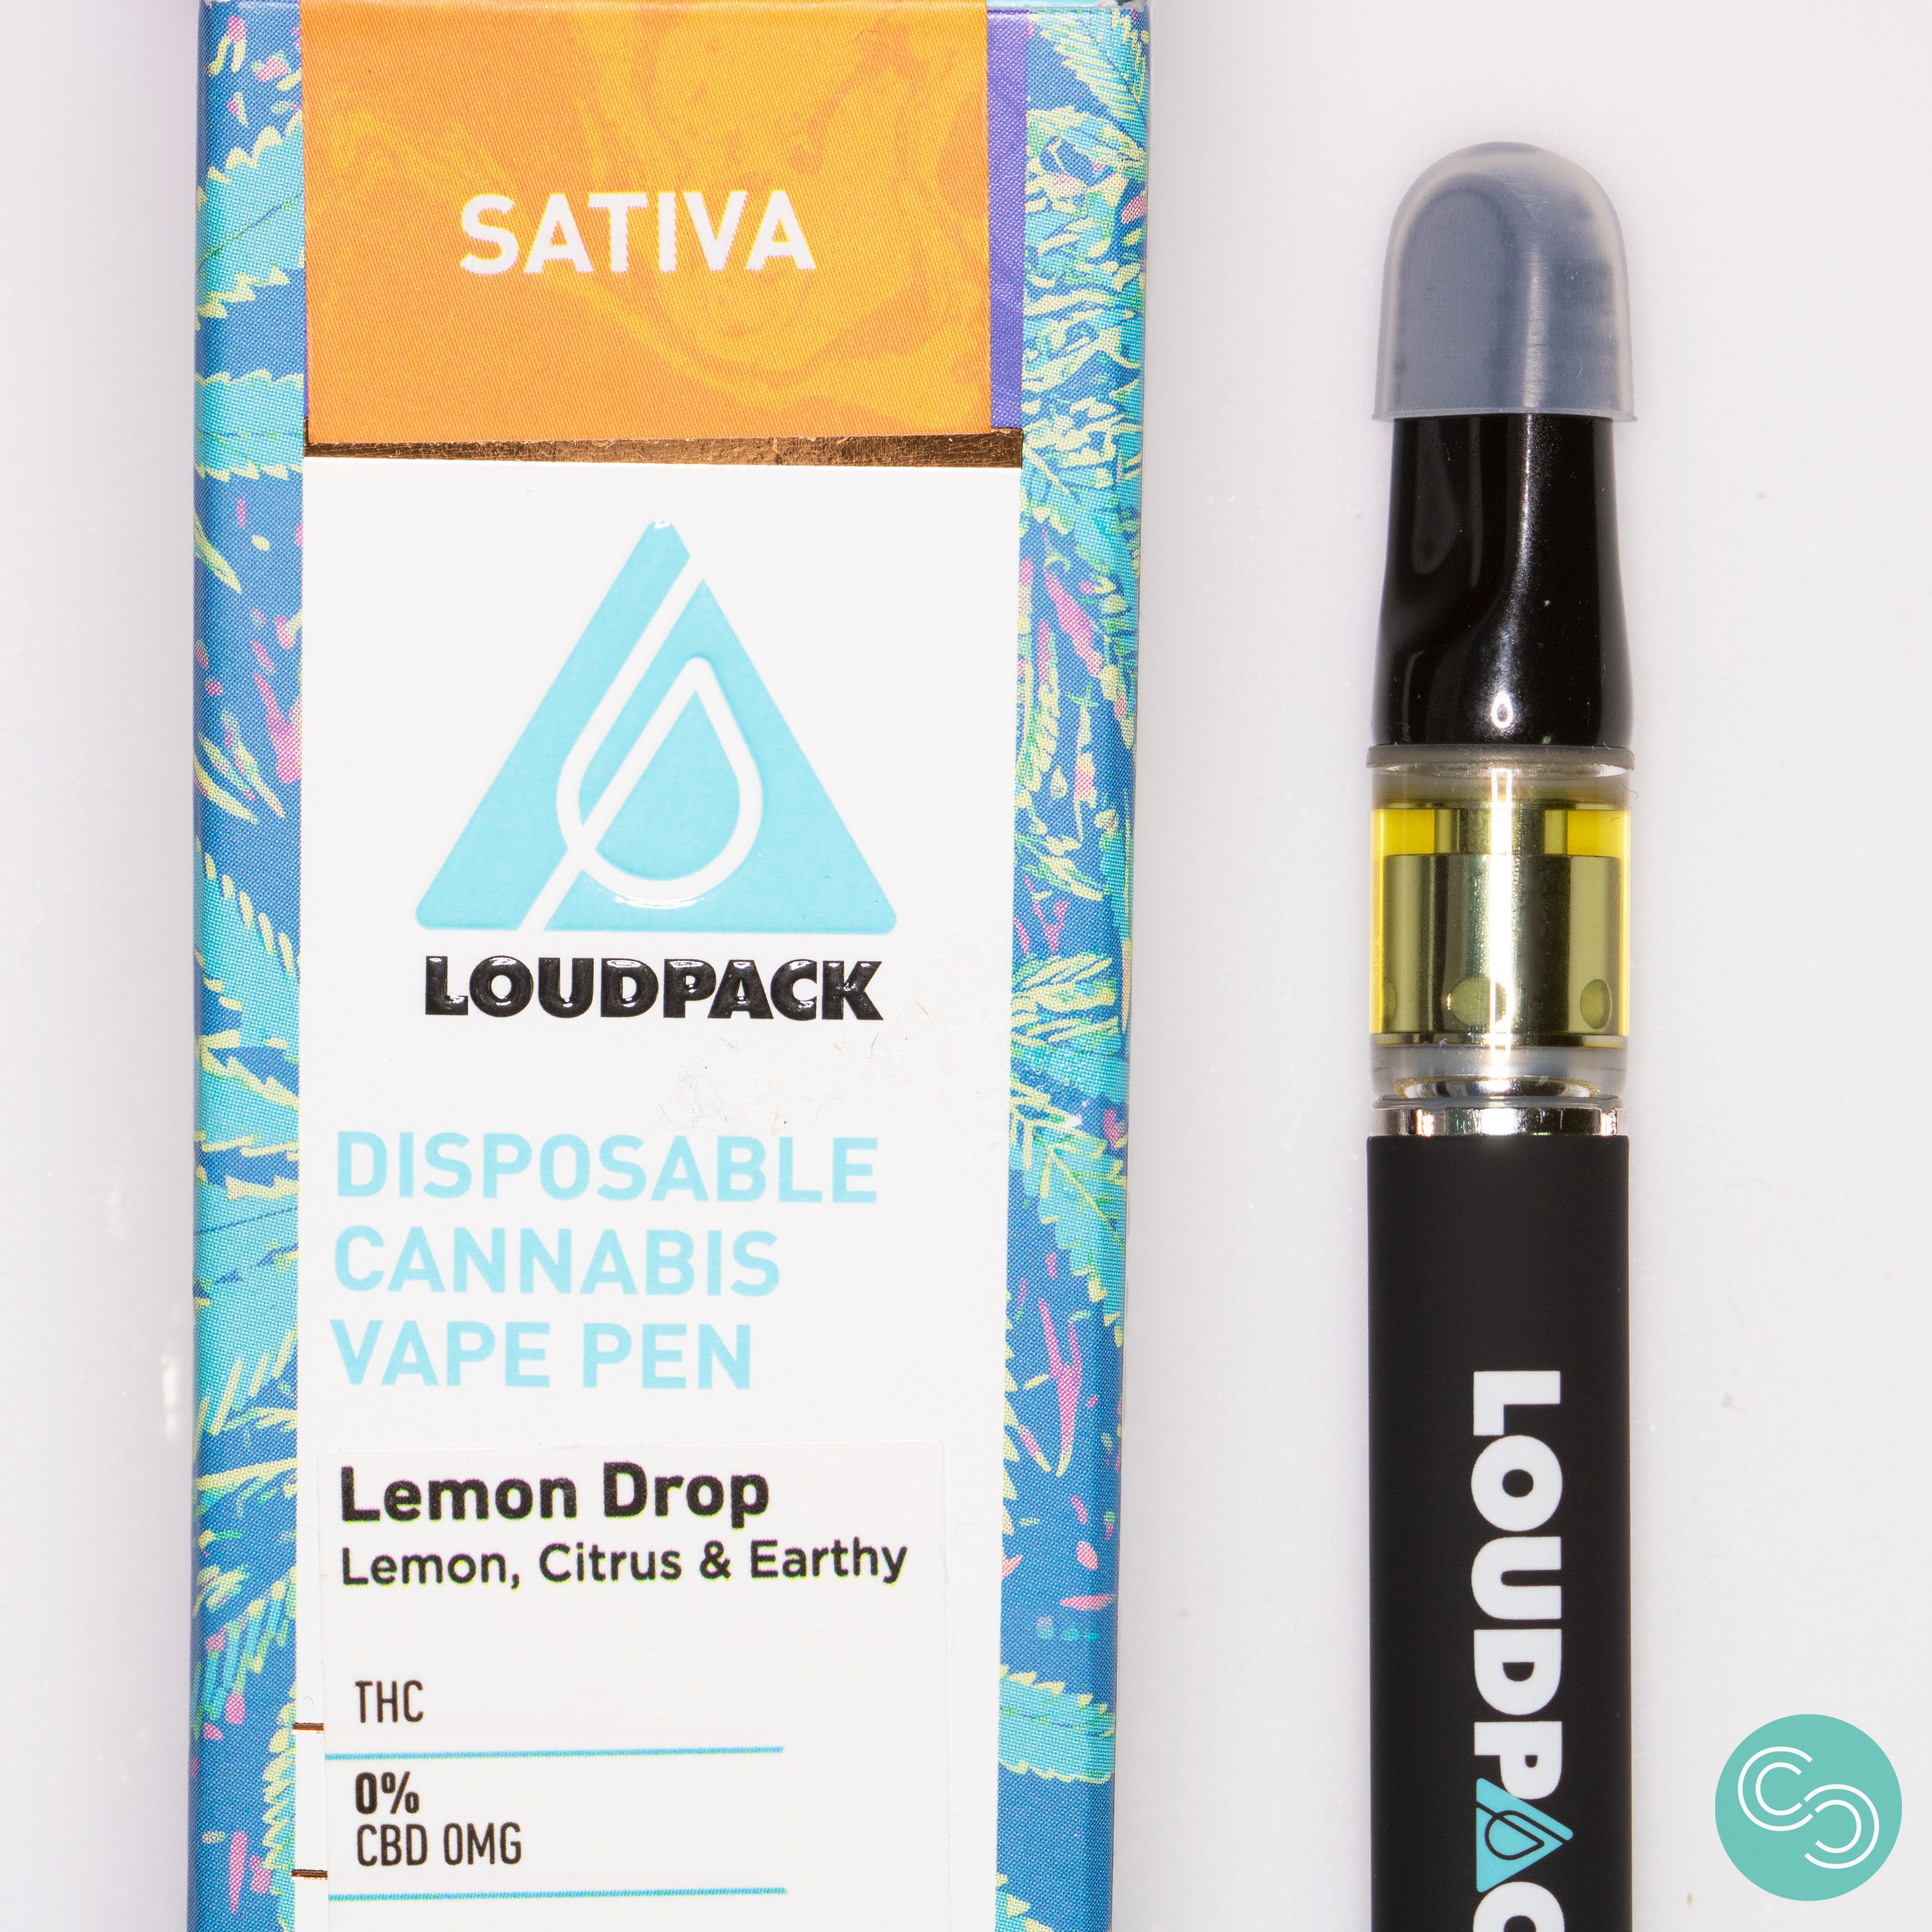 marijuana-dispensaries-114a-otto-circle-sacramento-loudpack-disposable-pen-lemon-drop-86-25-thc